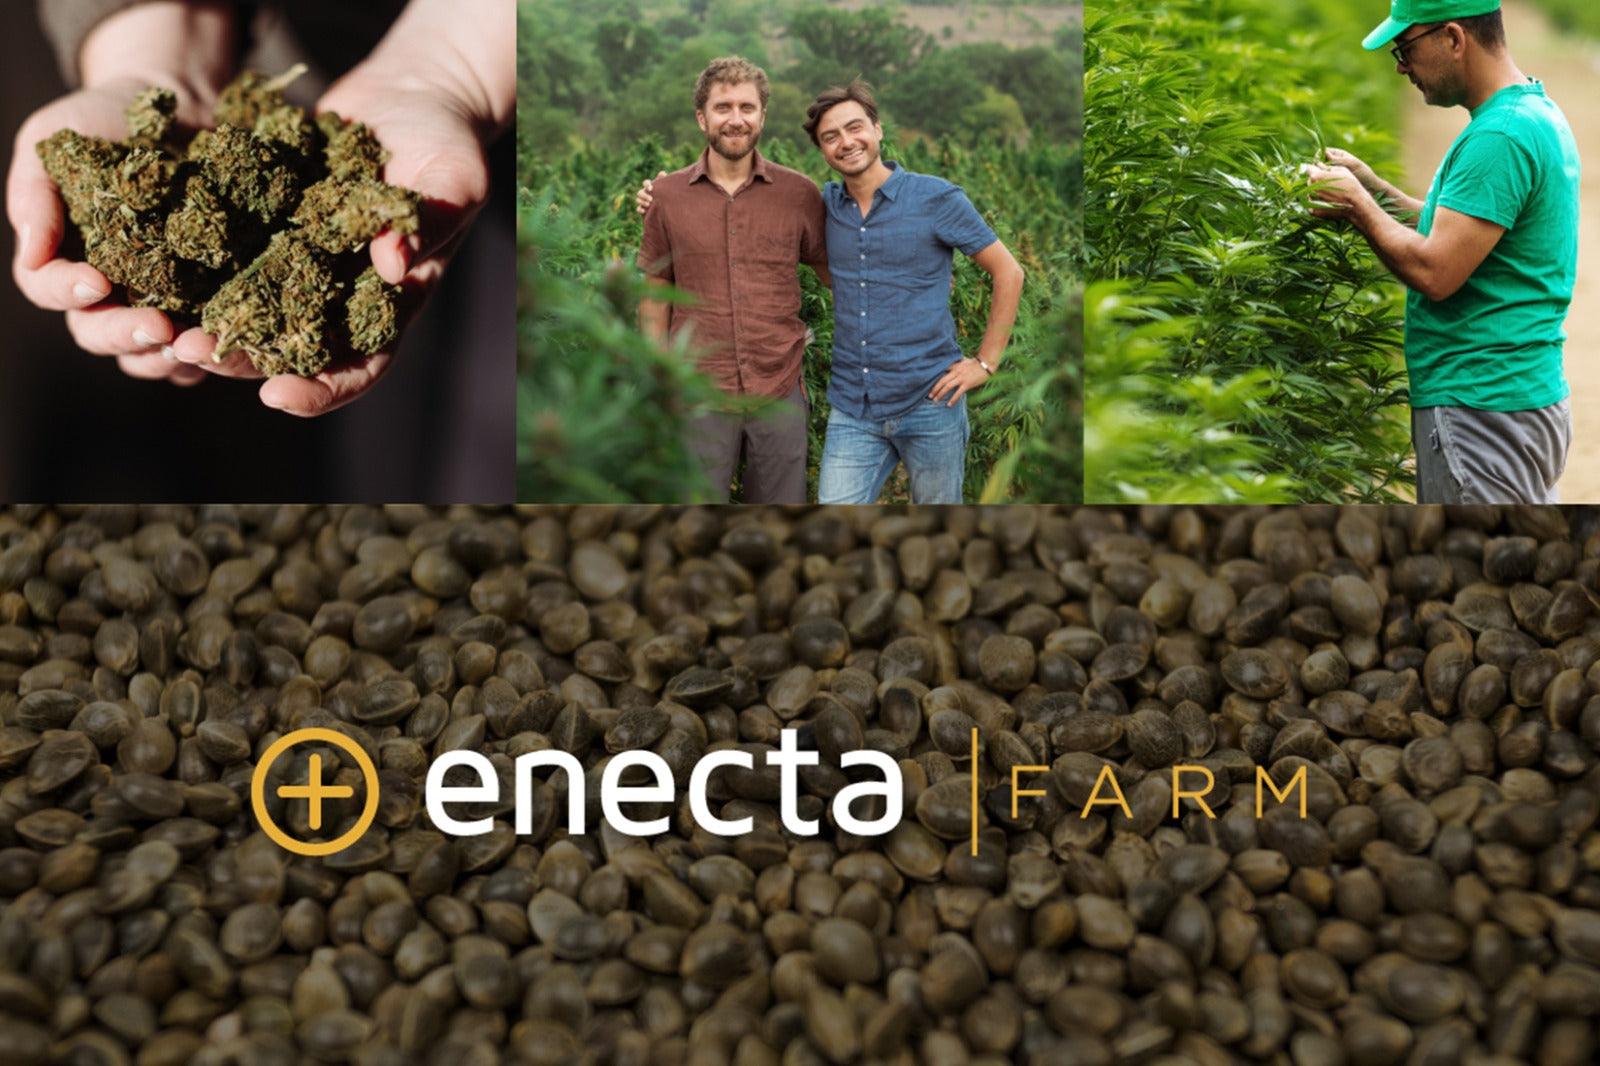 Enecta farm: bringing safe innovation to the hemp industry - Enecta.en